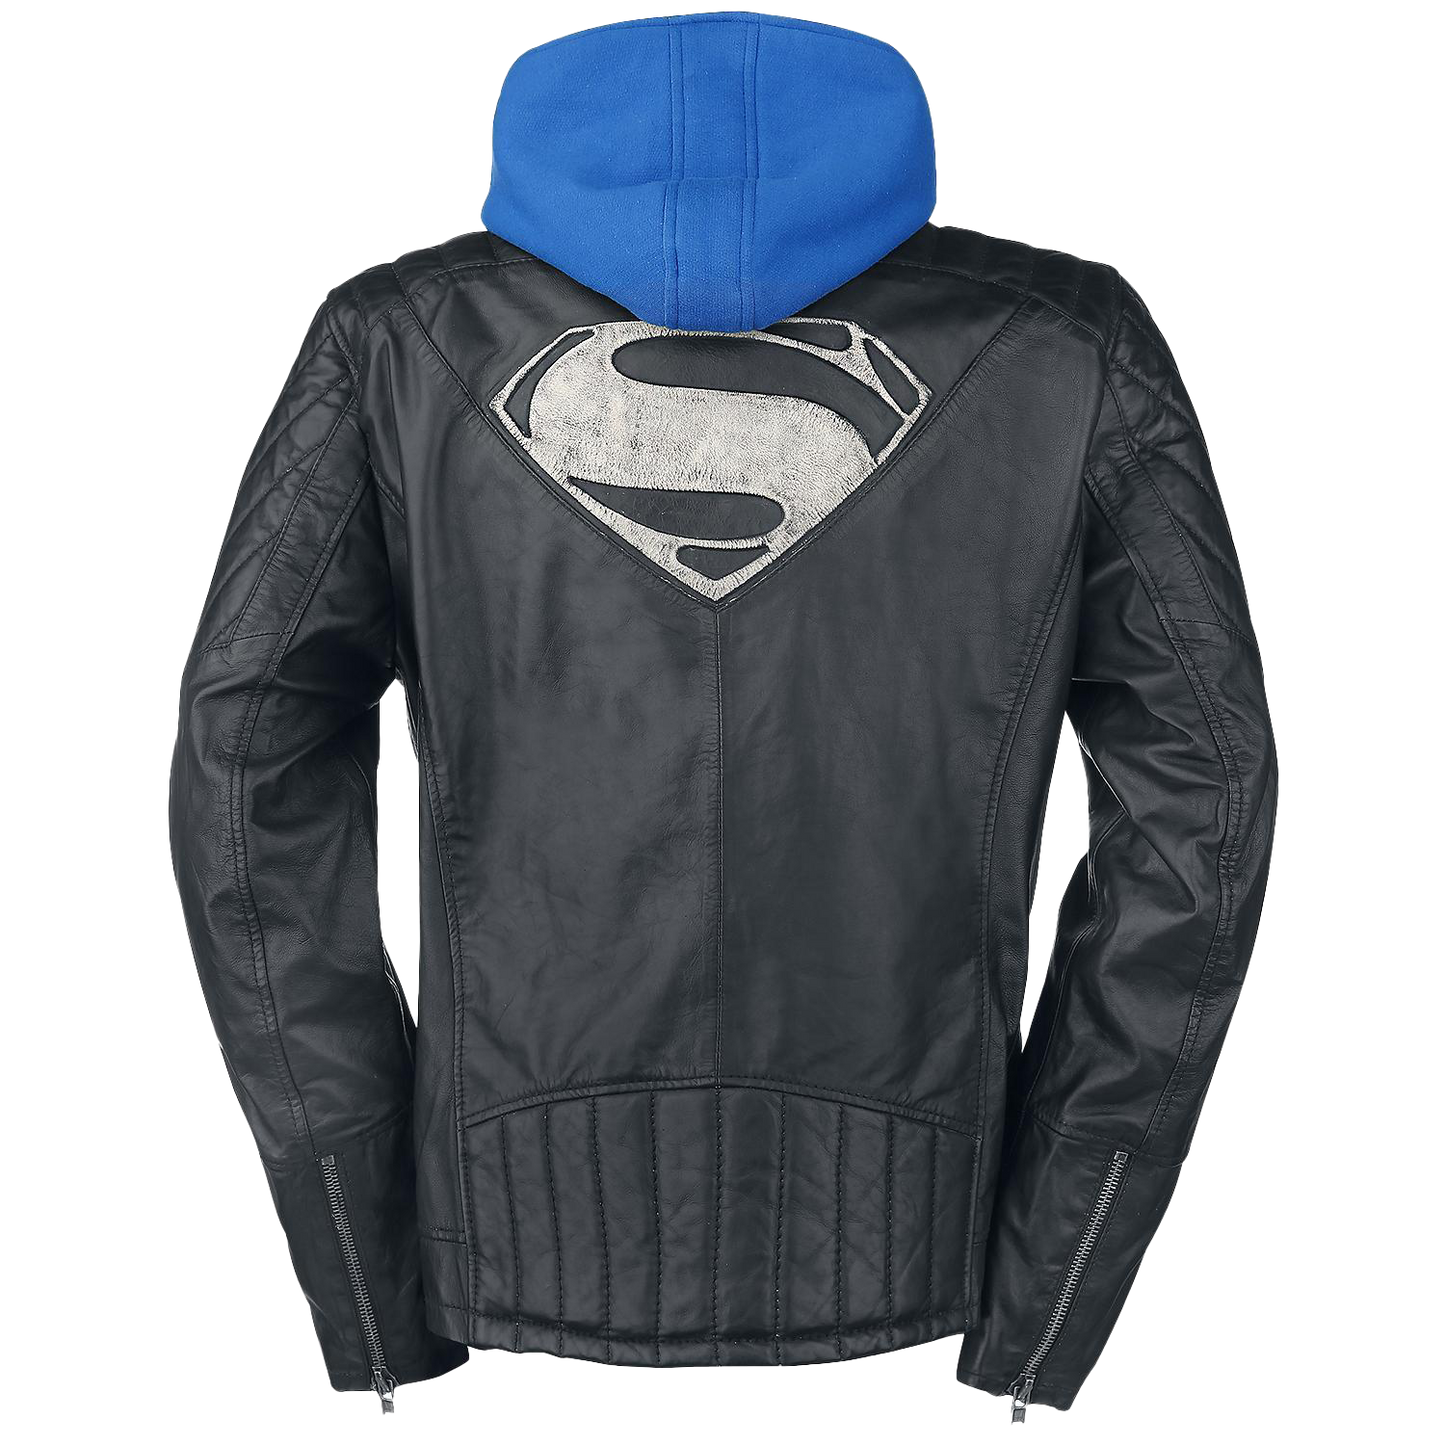 Men's Superhero S Logo Black Hooded Motorcycle Costume Leather Jacket | Mens Black Hooded Motorcycle Costume Leather Jacket - Button Stitched